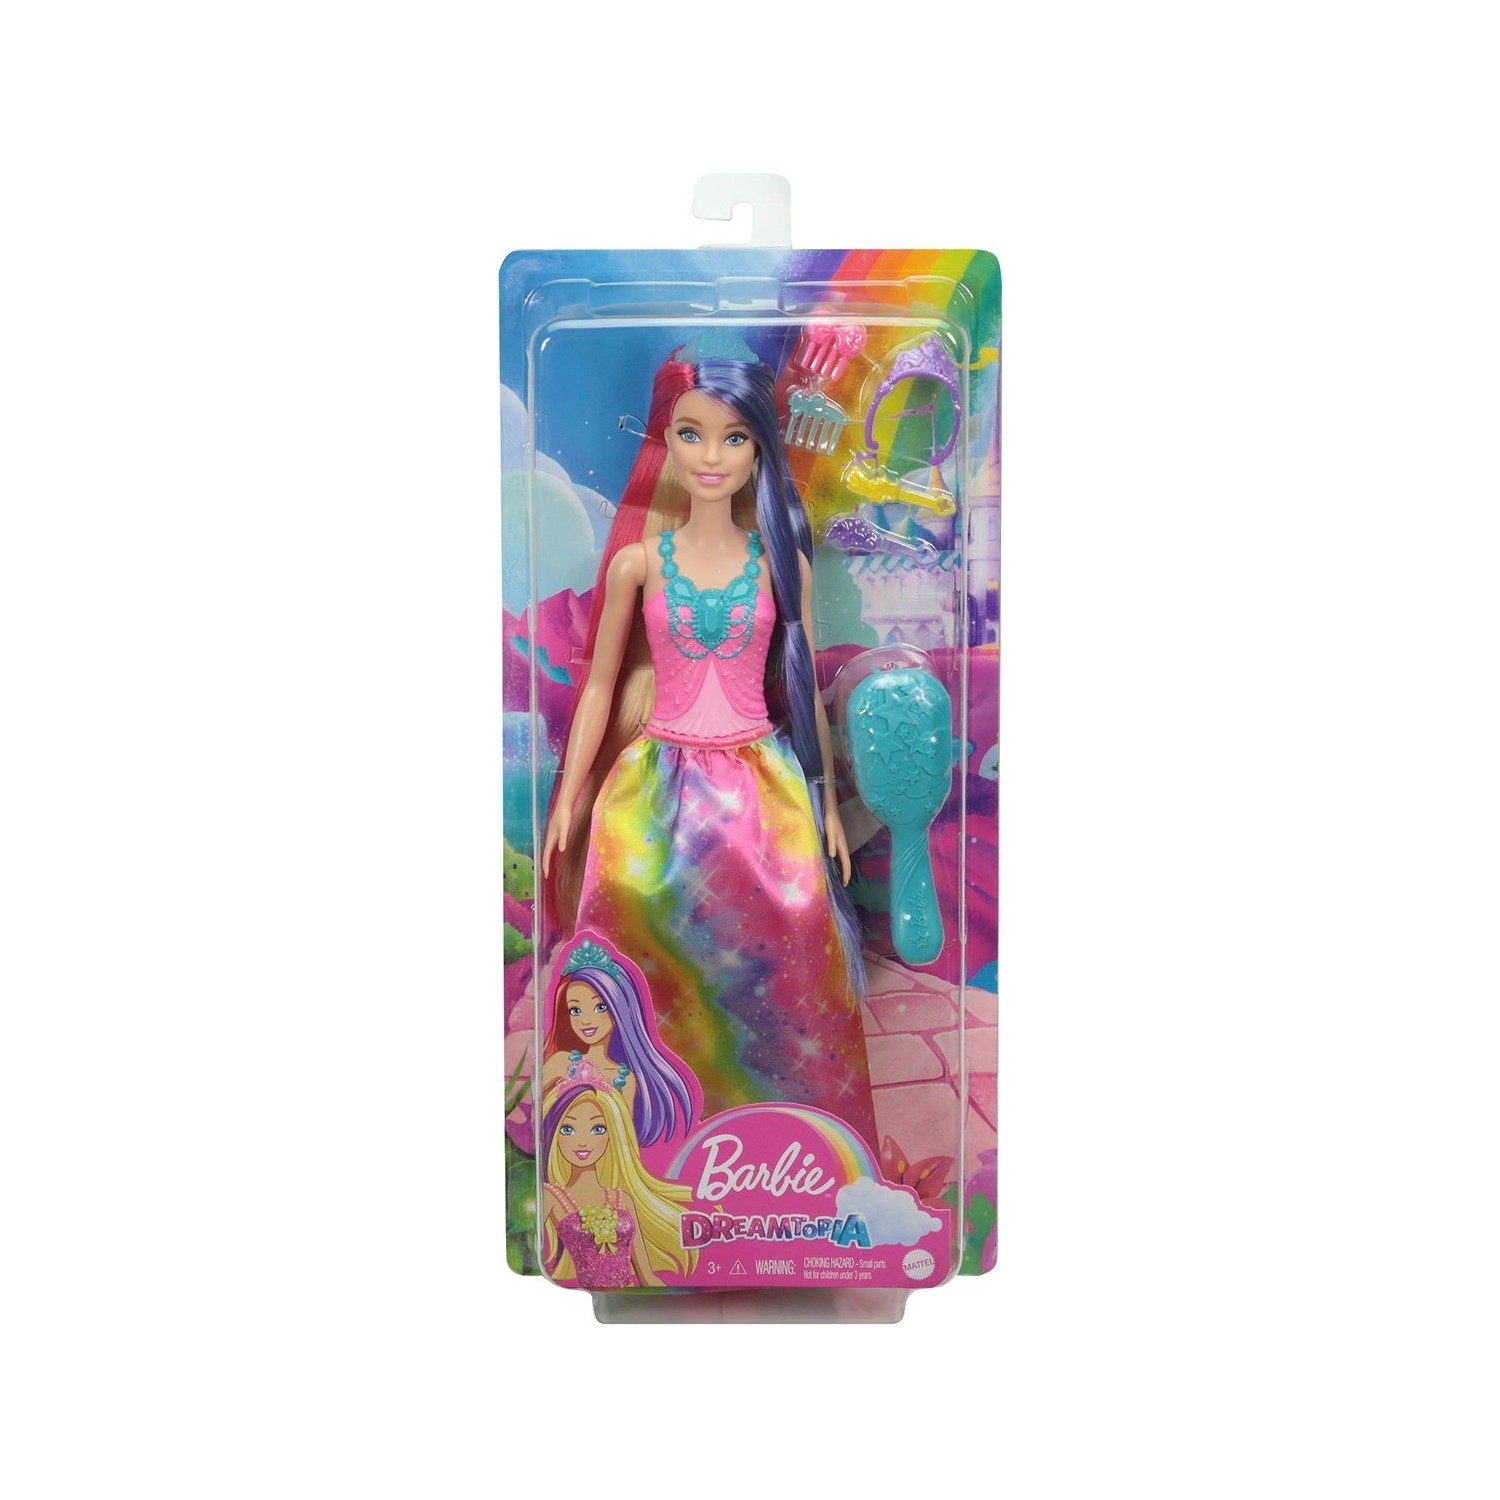 Кукла Barbie Barbie Dreamtopia Dreamland GTF37 игровой набор barbie кукла дримтопия и единорог